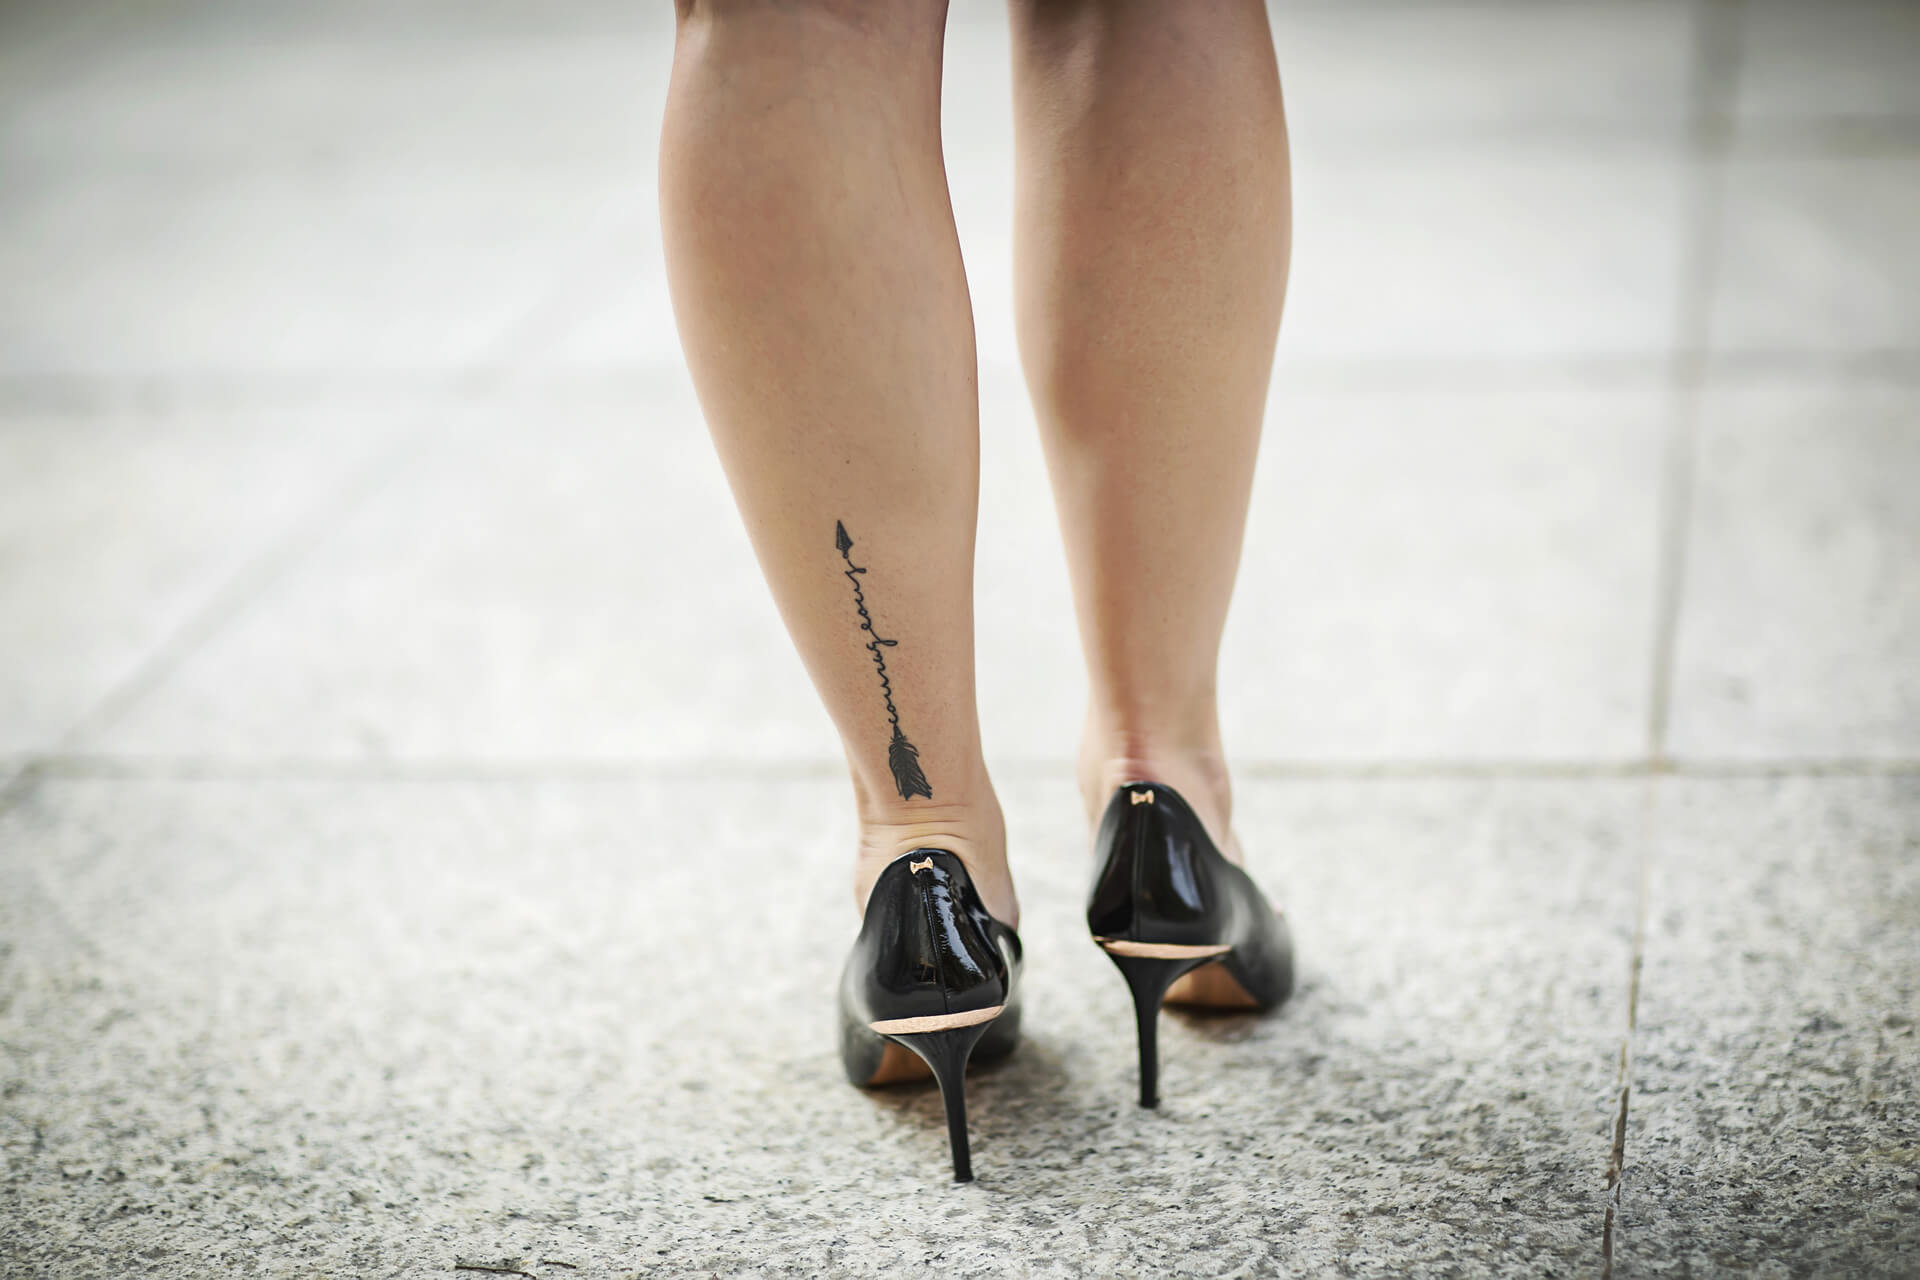 sherrie clark courage to be seen women tattoo